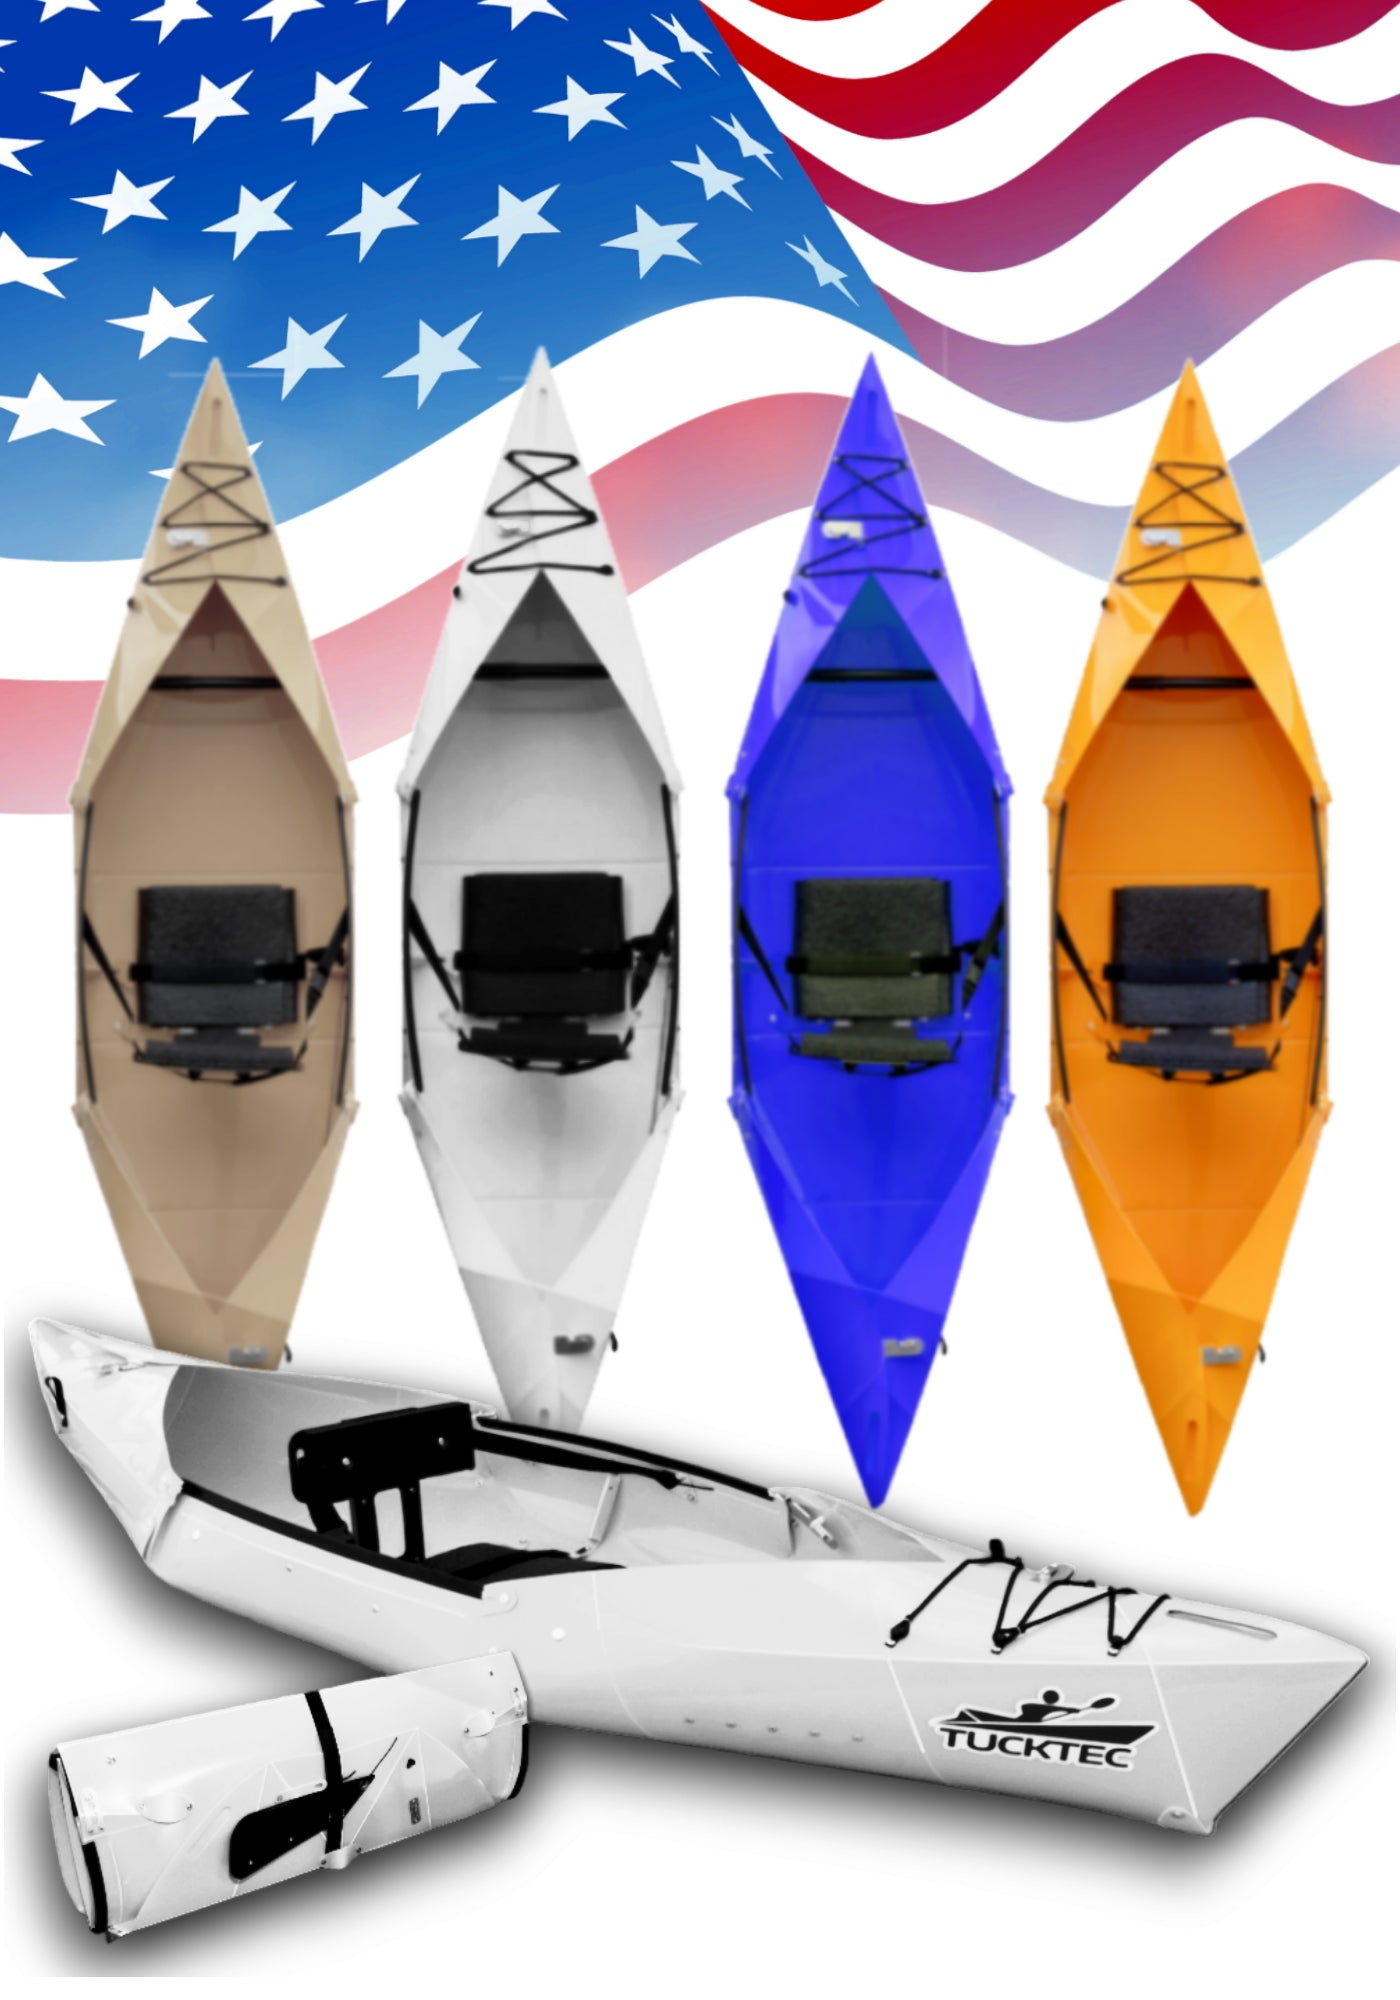 Tucktec Folding Kayak | Hard-Shell | 2-minute Set-up | Foldable, Portable Kayak